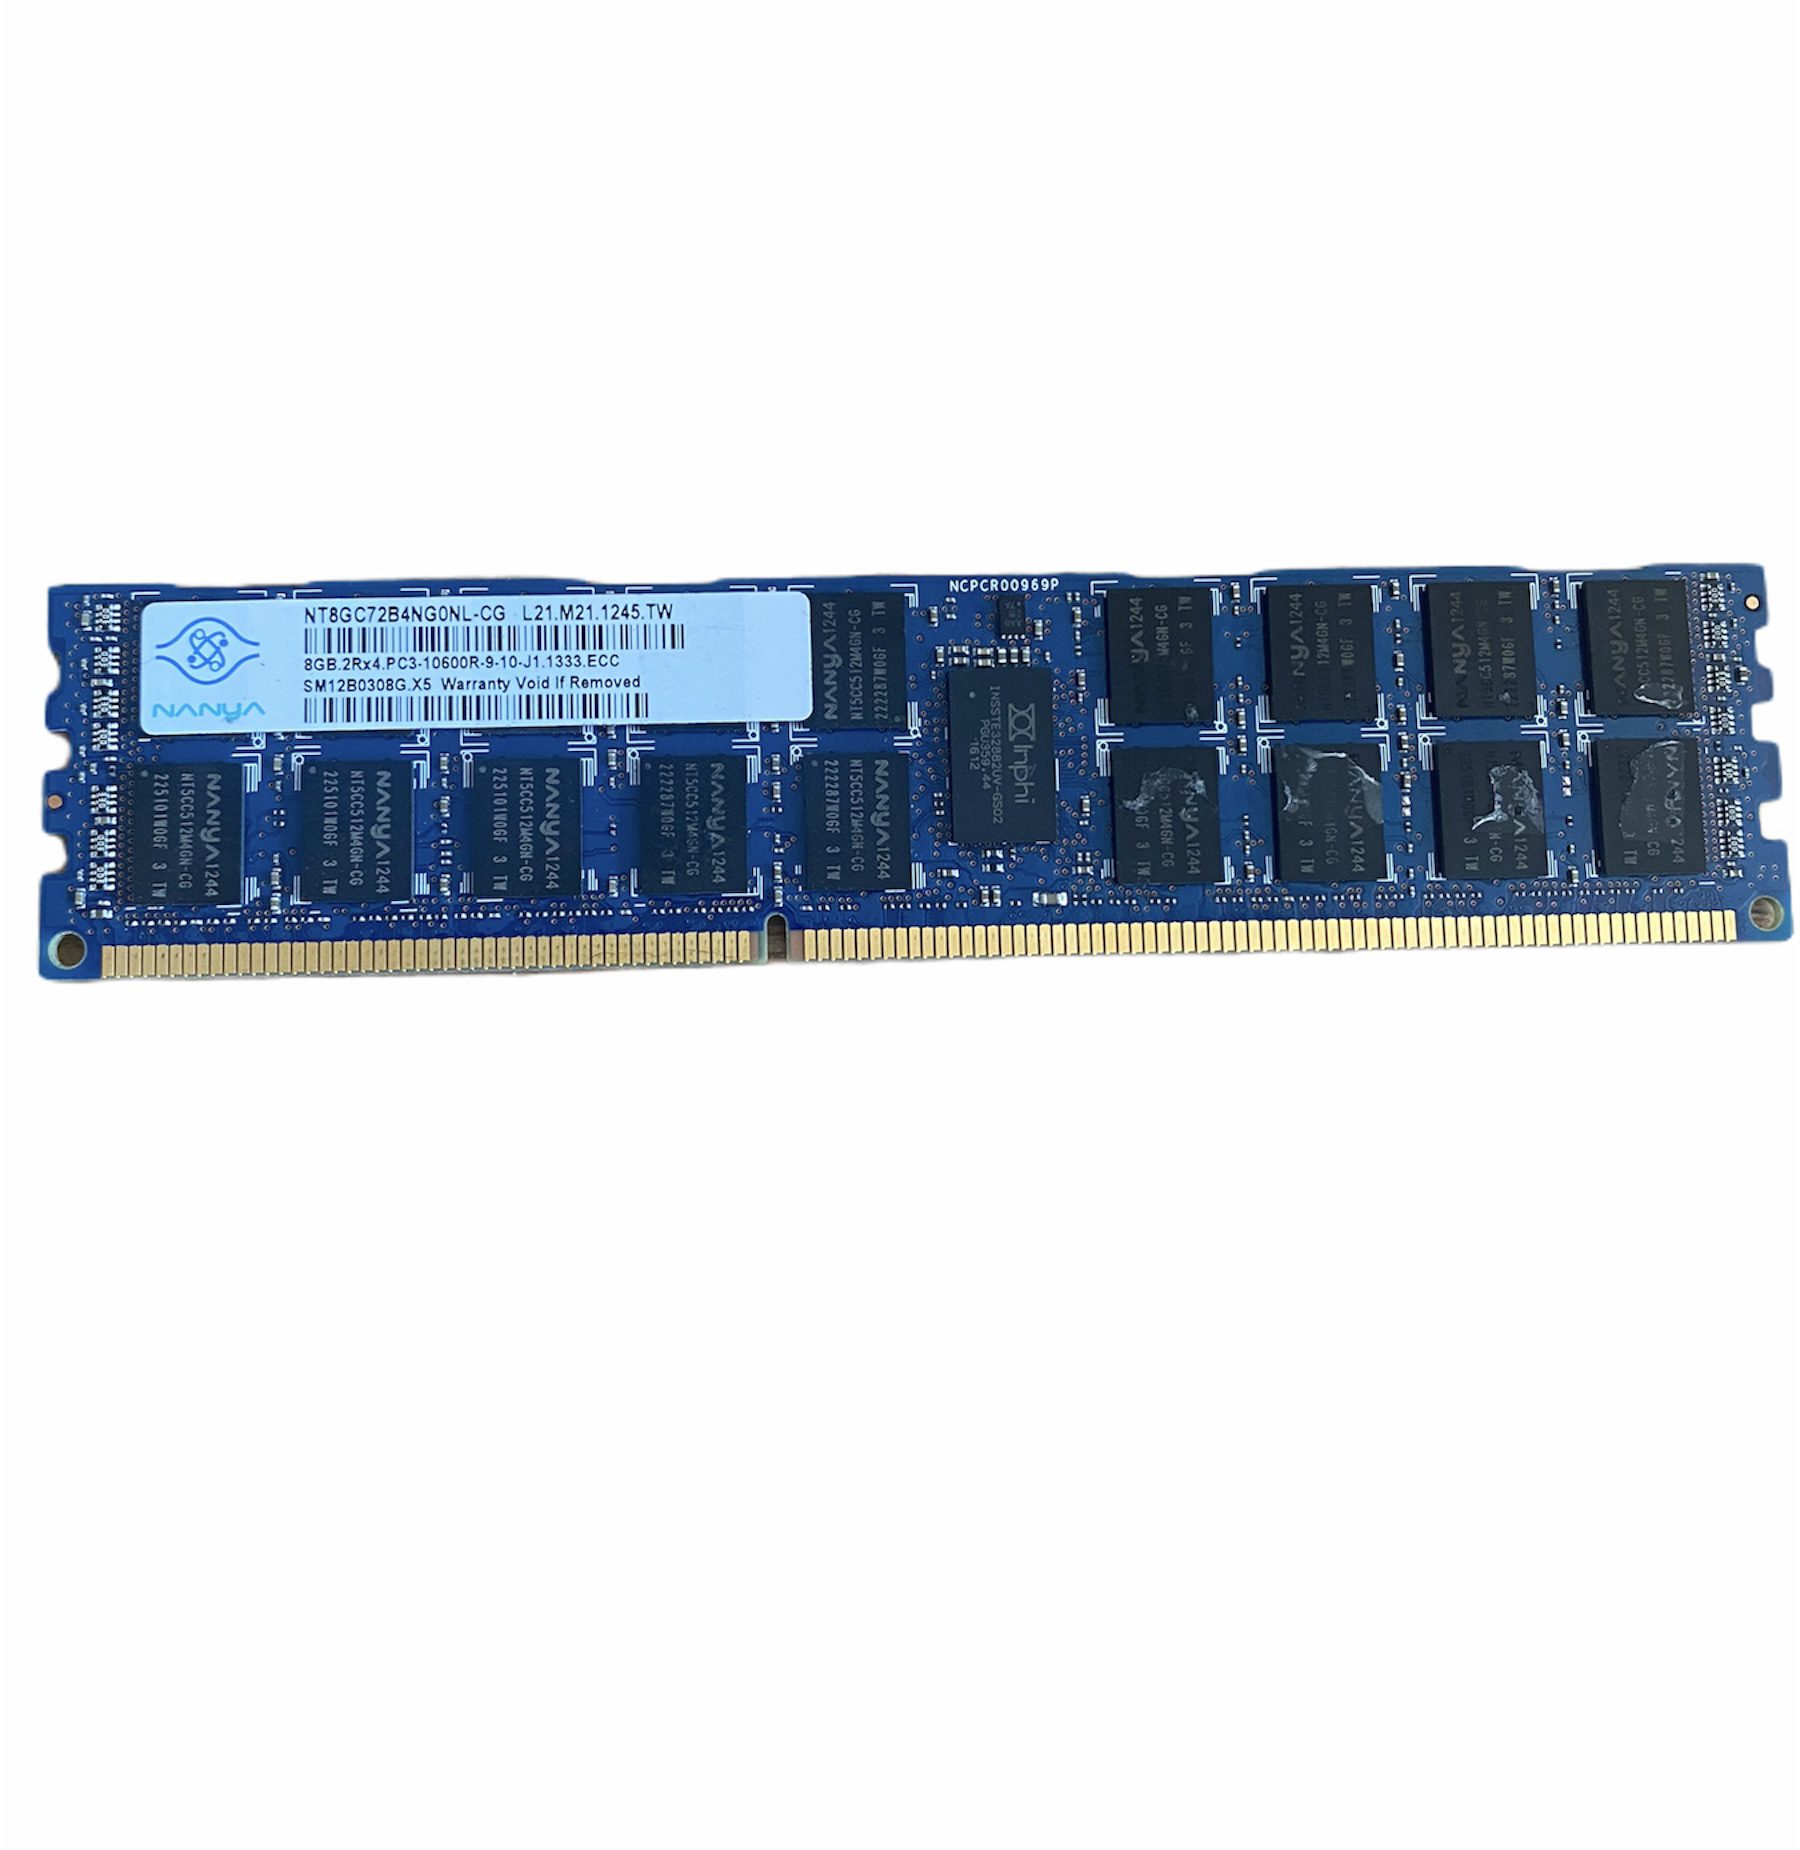 Nanya NT8GC72B4NG0NL-CG 8 GB DDR3 PC3-10600R RDIMM